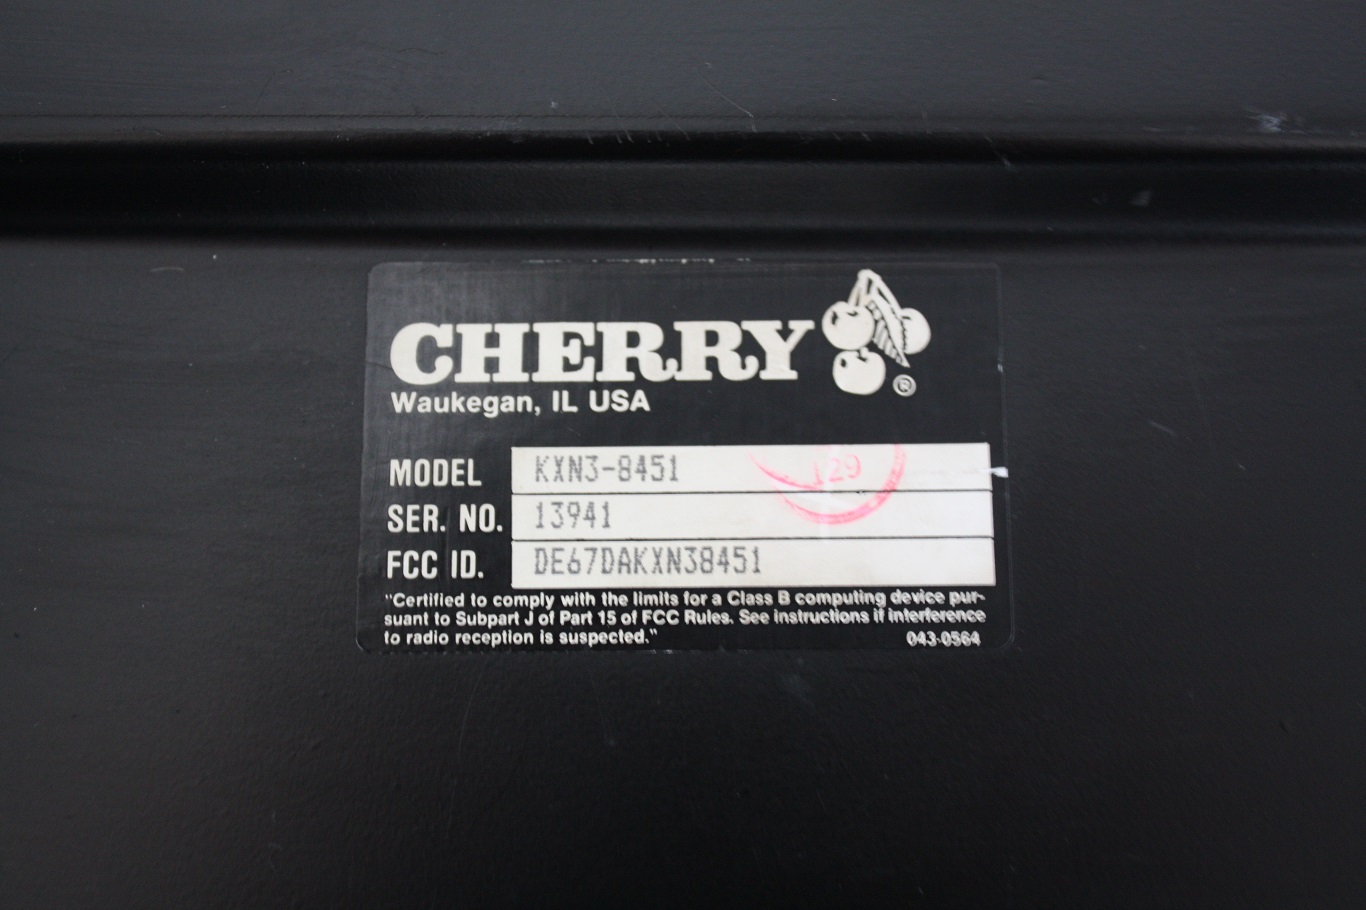 Cherry PCjr MX - keyboard model number